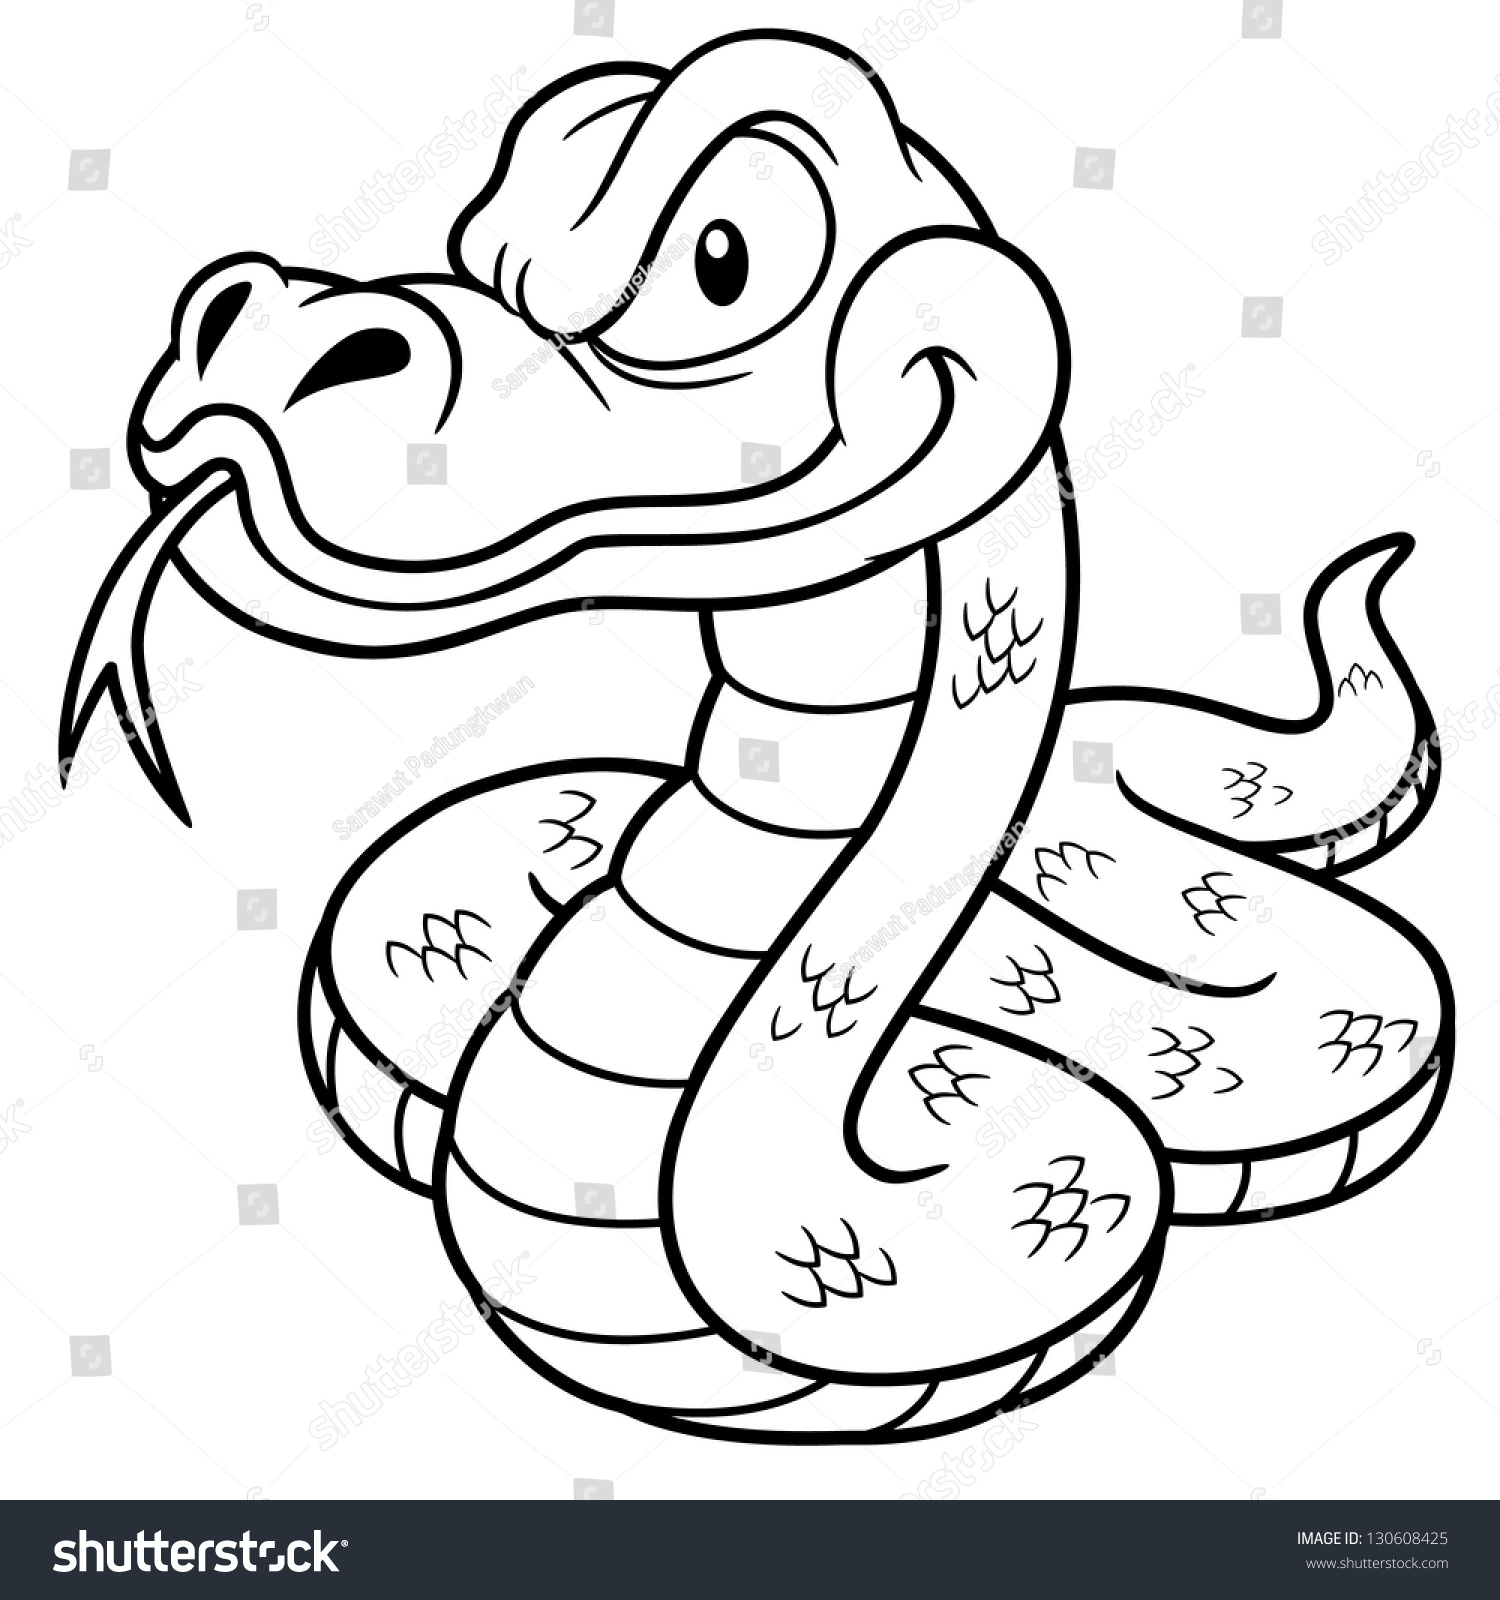 Vector illustration cartoon snake coloring book stock vector royalty free